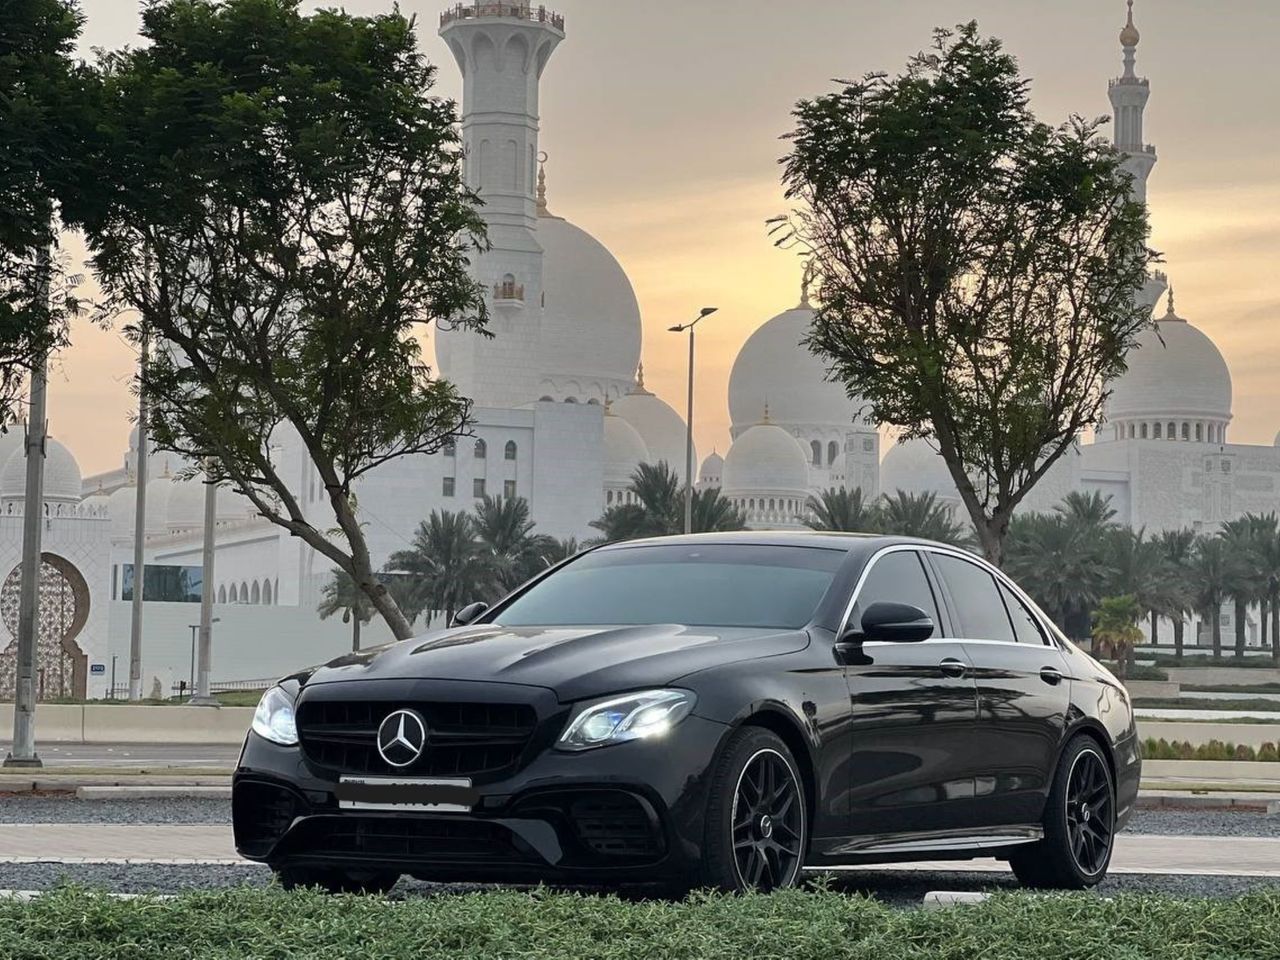 VIP-экскурсия в Абу-Даби на Mercedes бизнес-класса | Цена 400$, отзывы, описание экскурсии